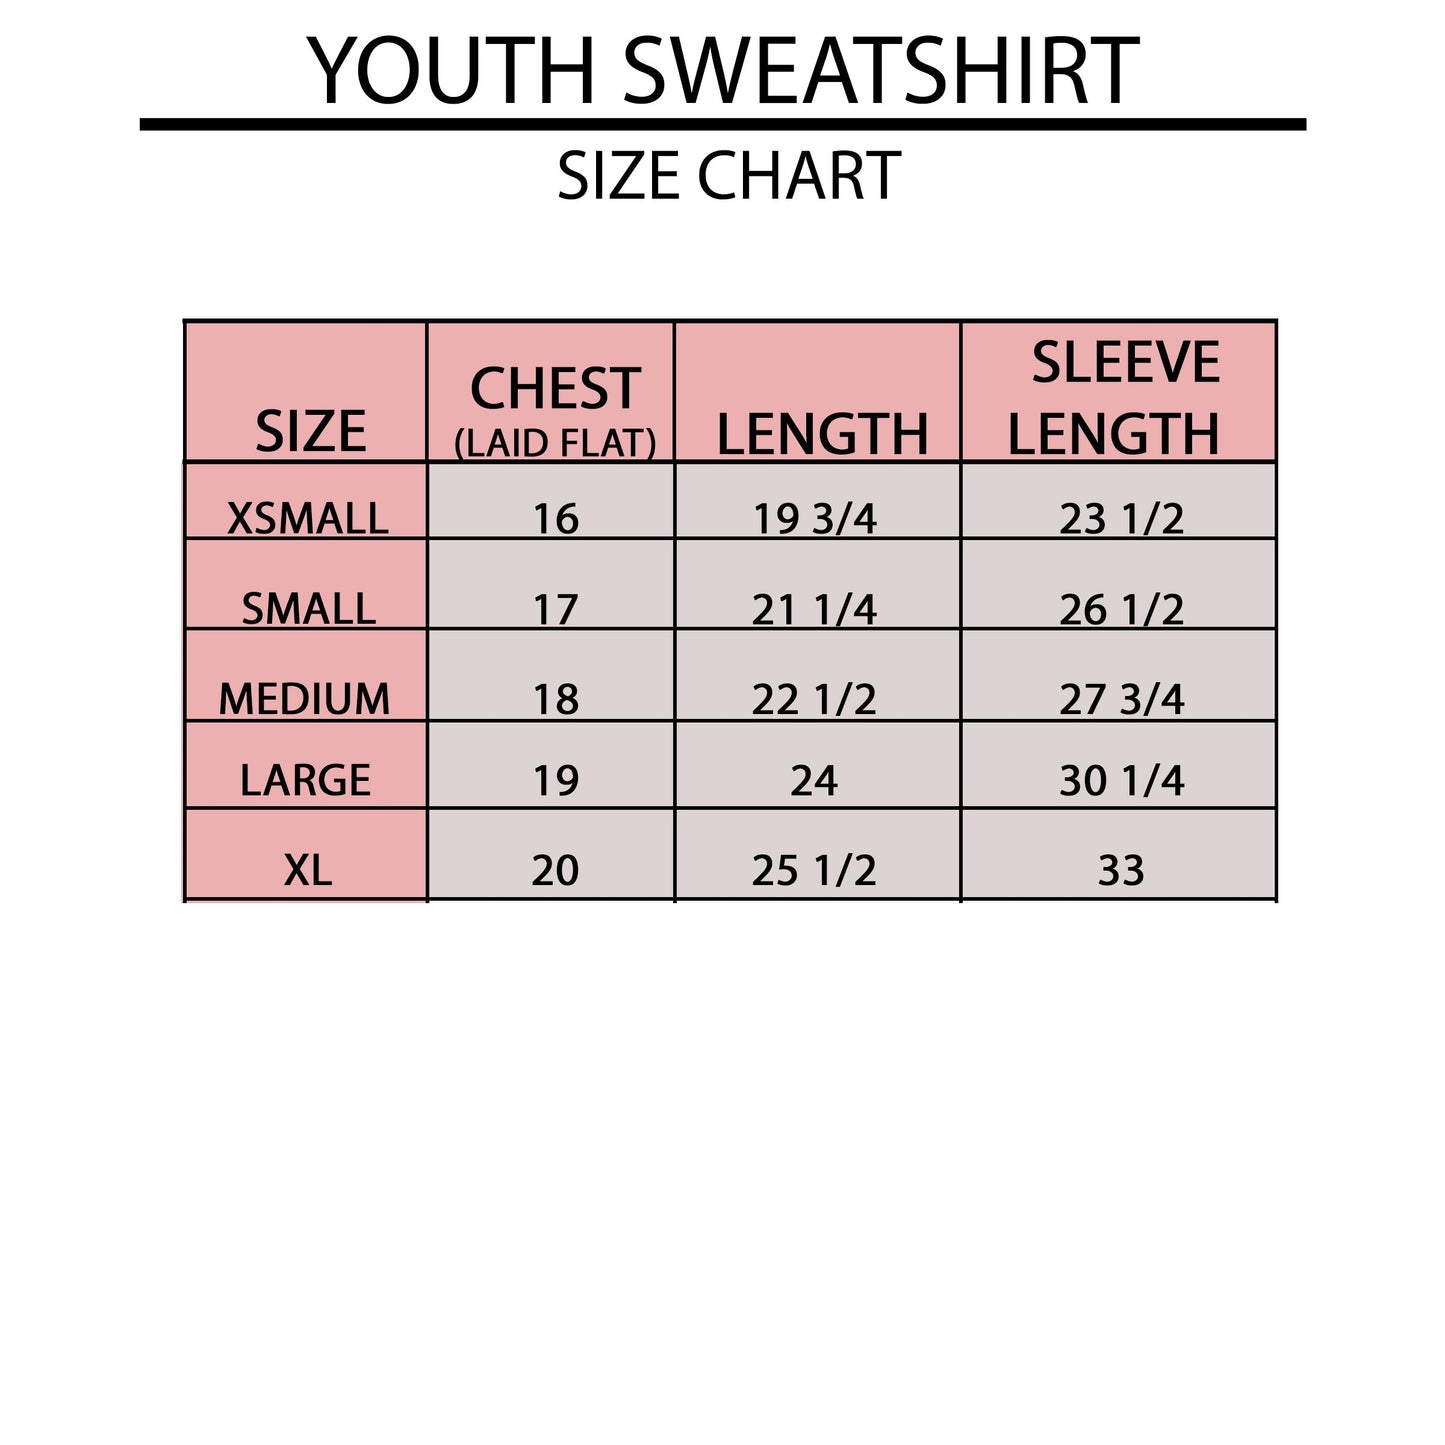 Retro Jingle All The Time | Youth Sweatshirt